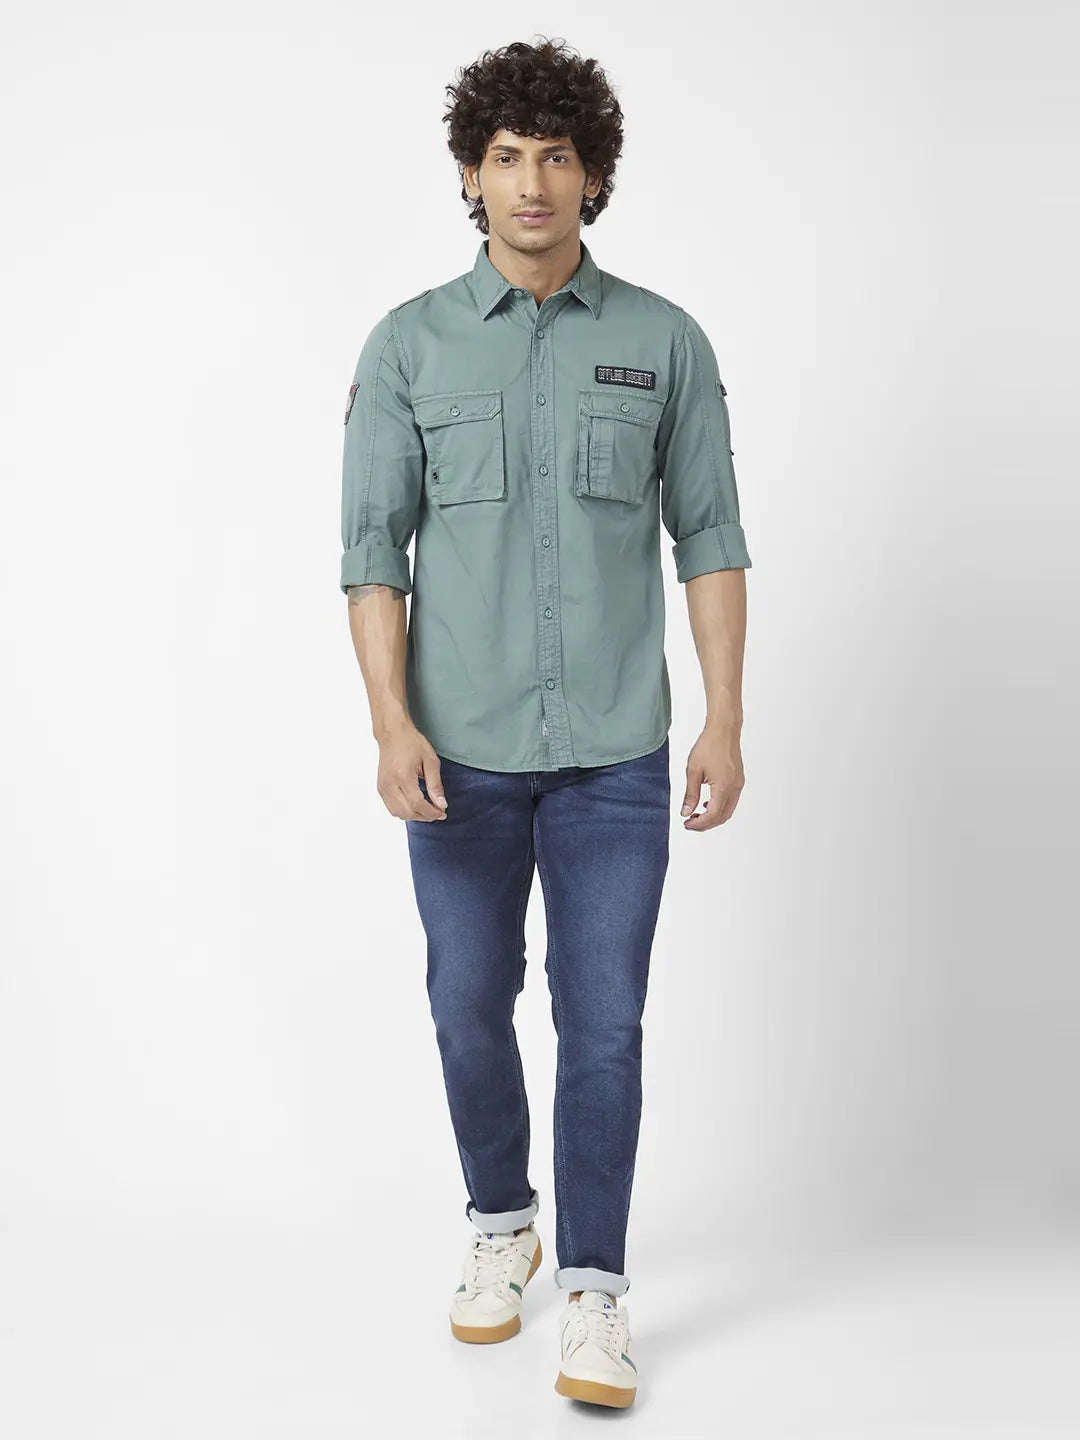 Buy Locomotive Black Slim Fit Solid Casual Shirt for Men Online at Rs.752 -  Ketch